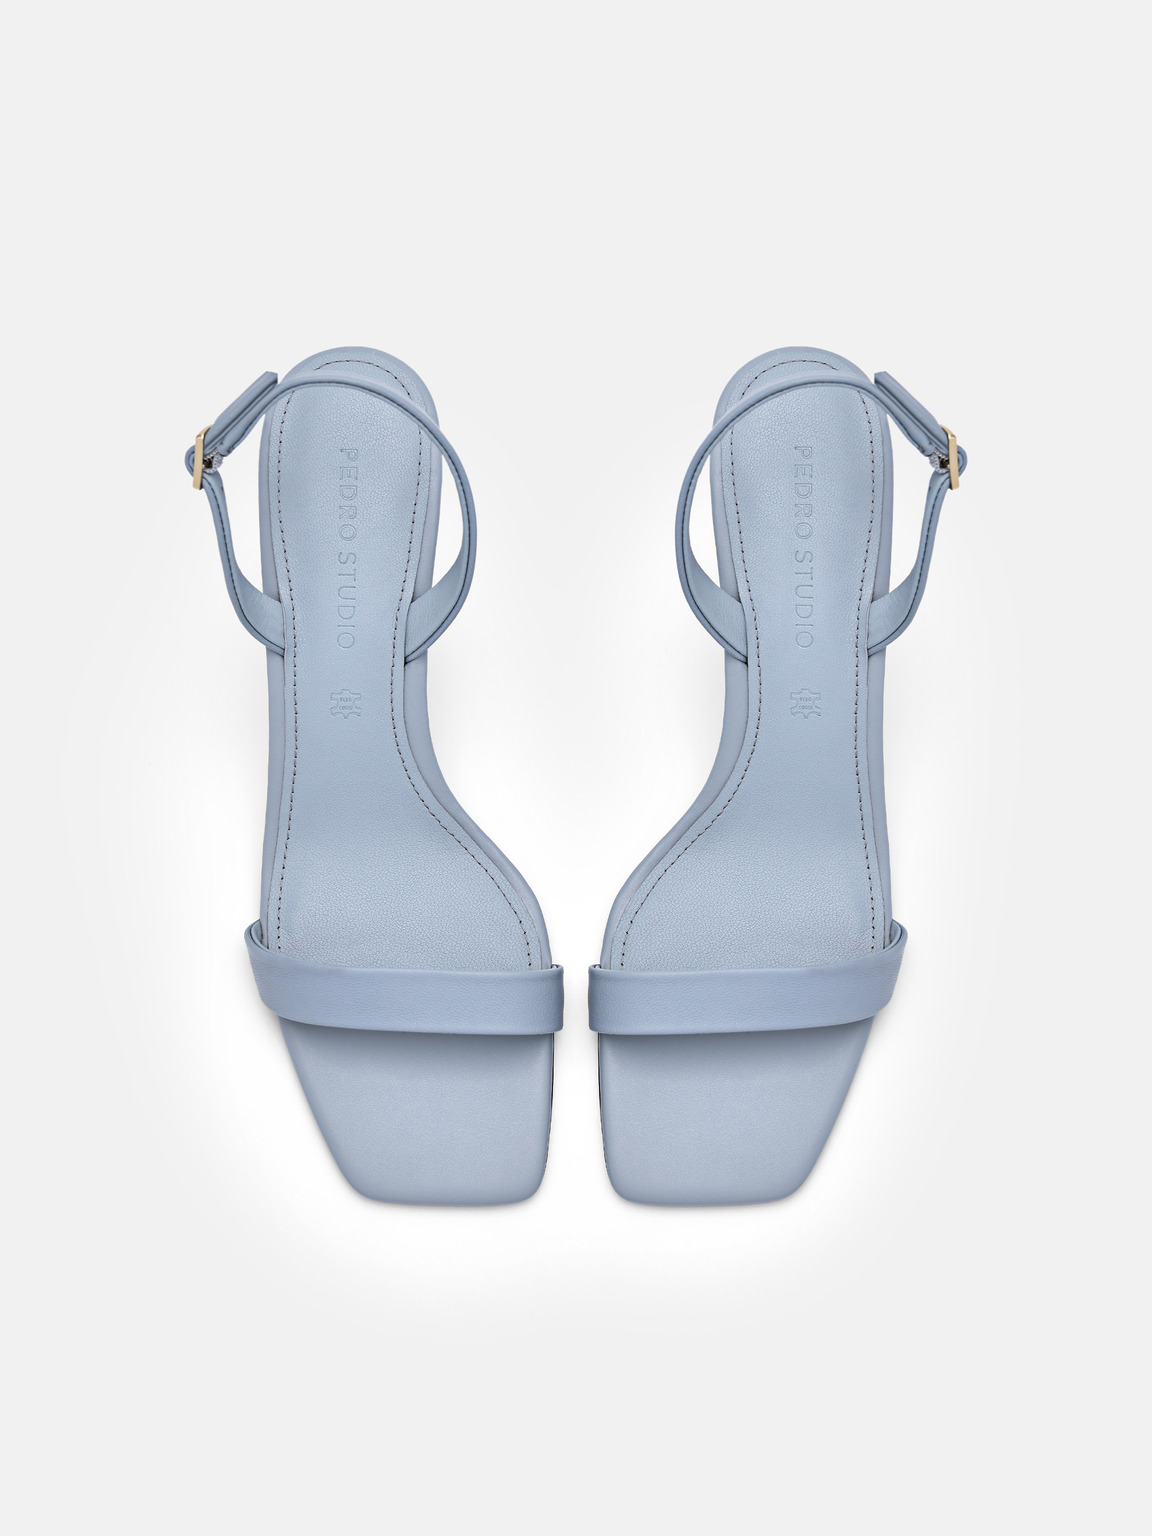 PEDRO工作室Mel皮革高跟涼鞋, 石蓝色